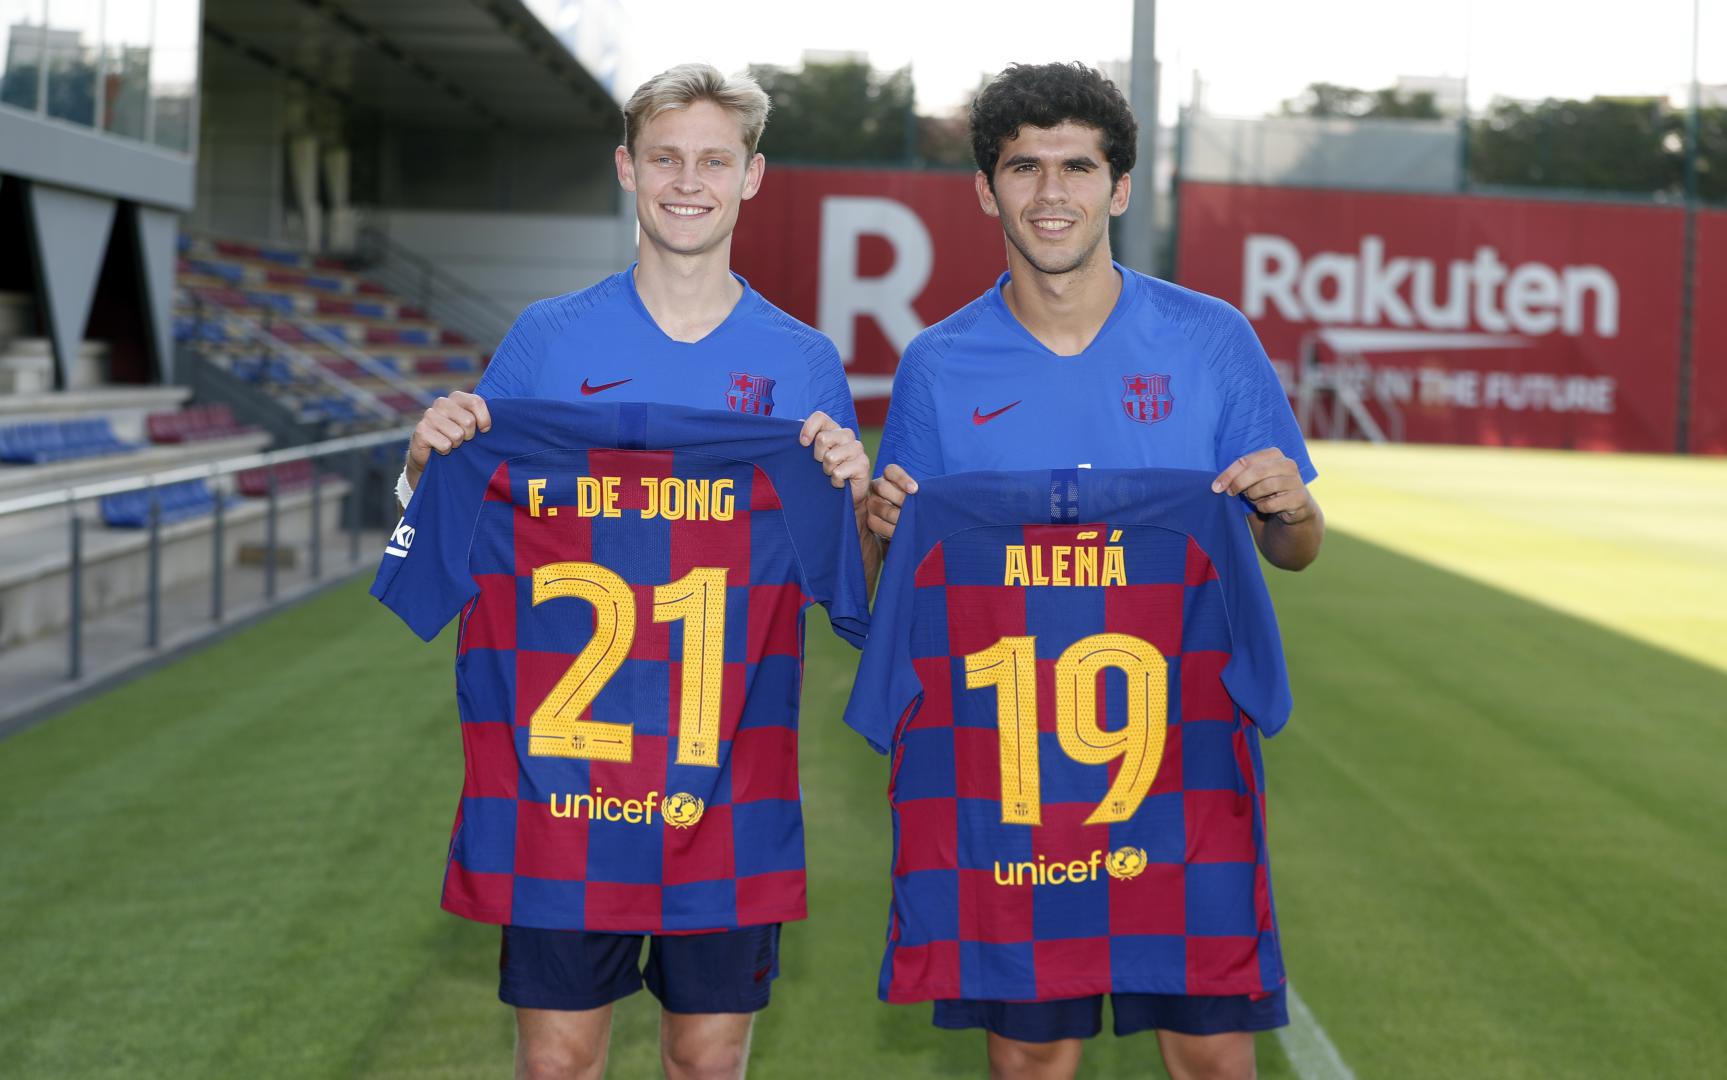 De Jong to wear number 21; Aleñá 